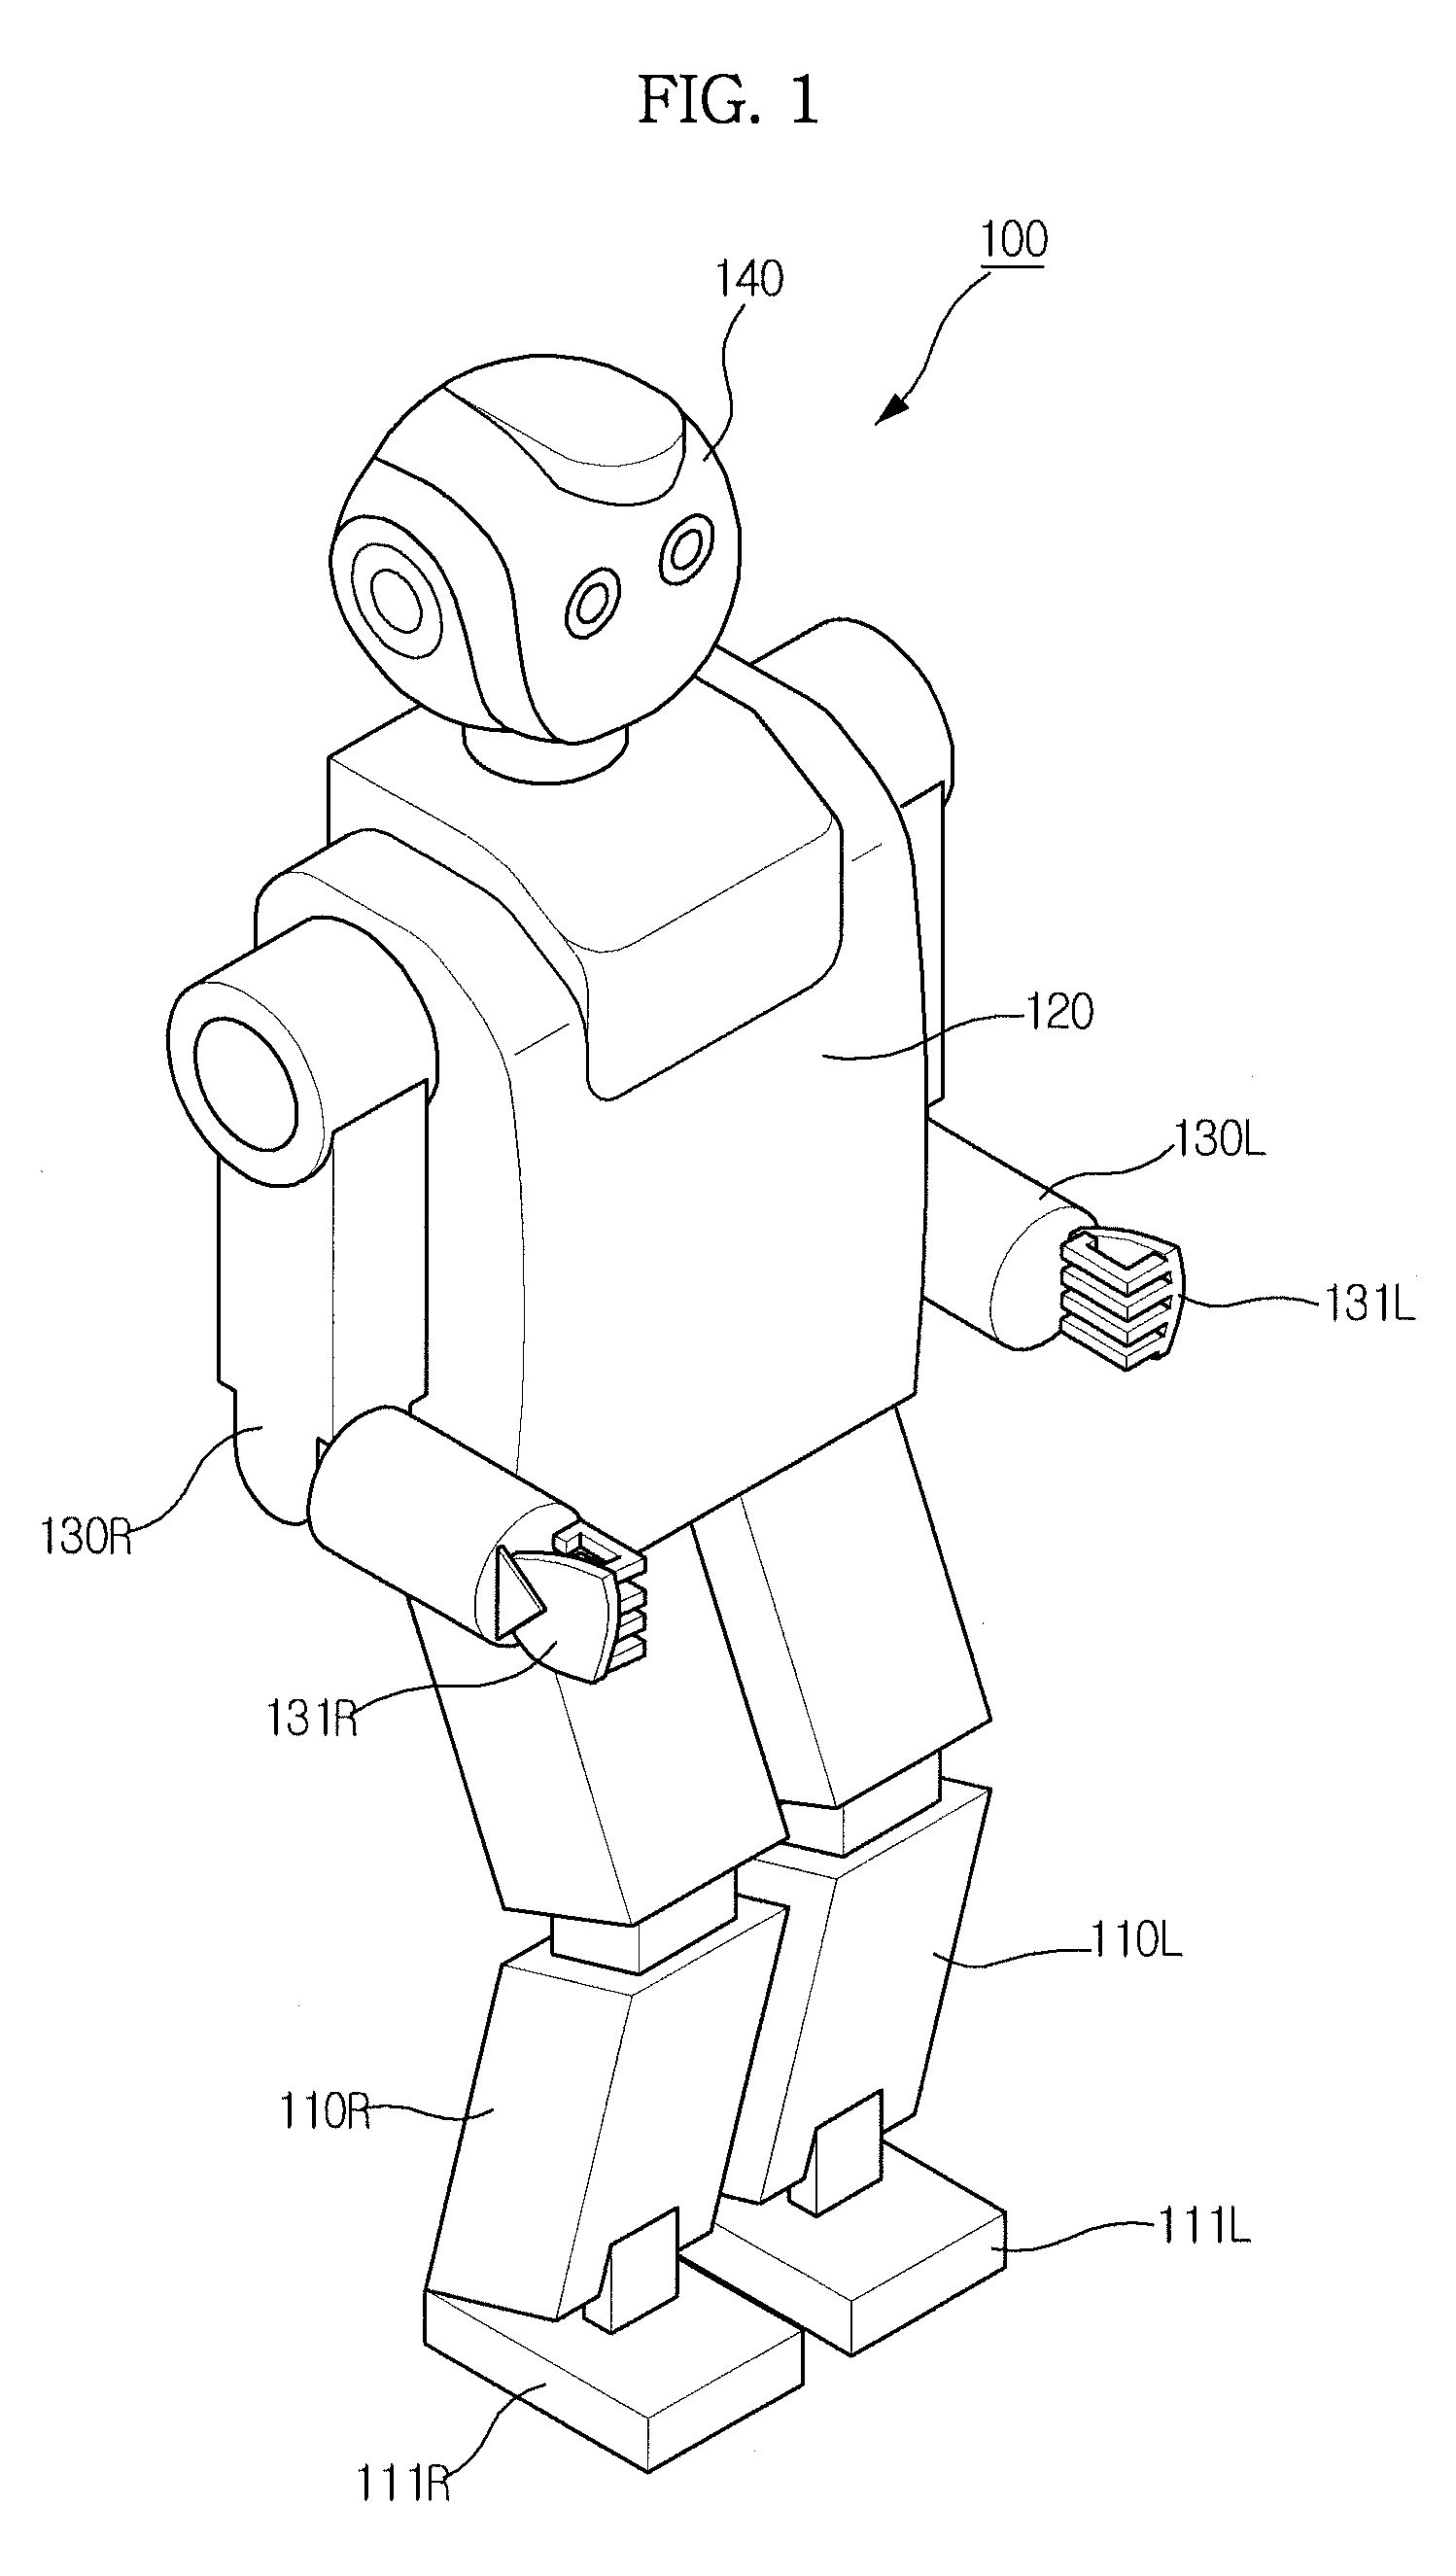 Robot and control method thereof